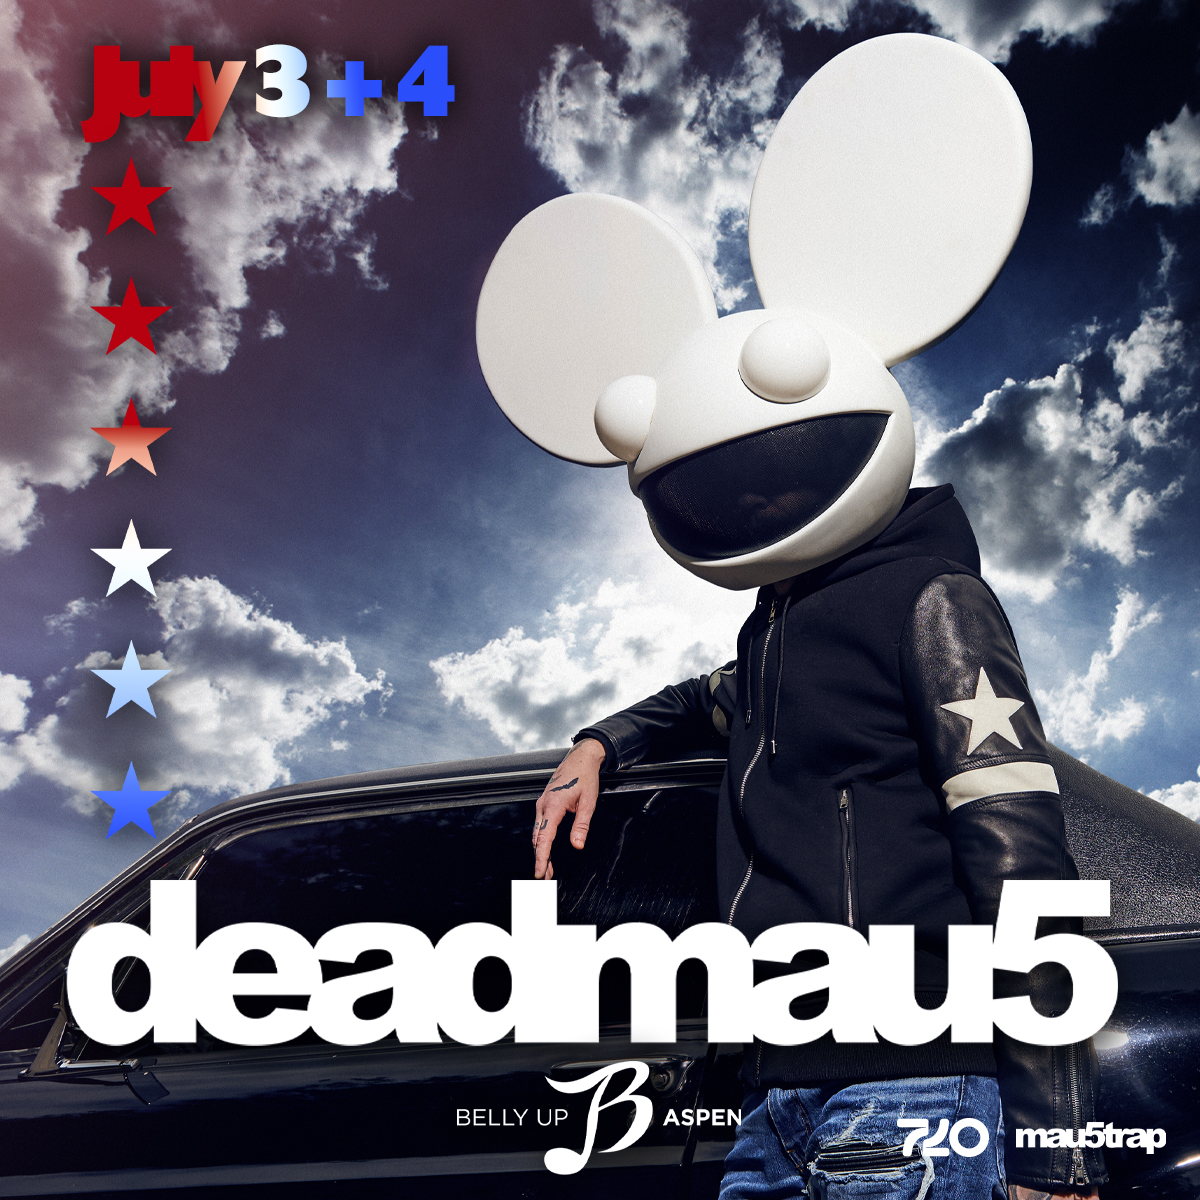 “Electronic music icon” (EDM.com) @deadmau5 returns 7/3 + 7/4! Presale starts Thu, 4/18 @ 10am MT. Sign up by 8:30am MT 4/18 to receive the presale code: bit.ly/3MSARpt